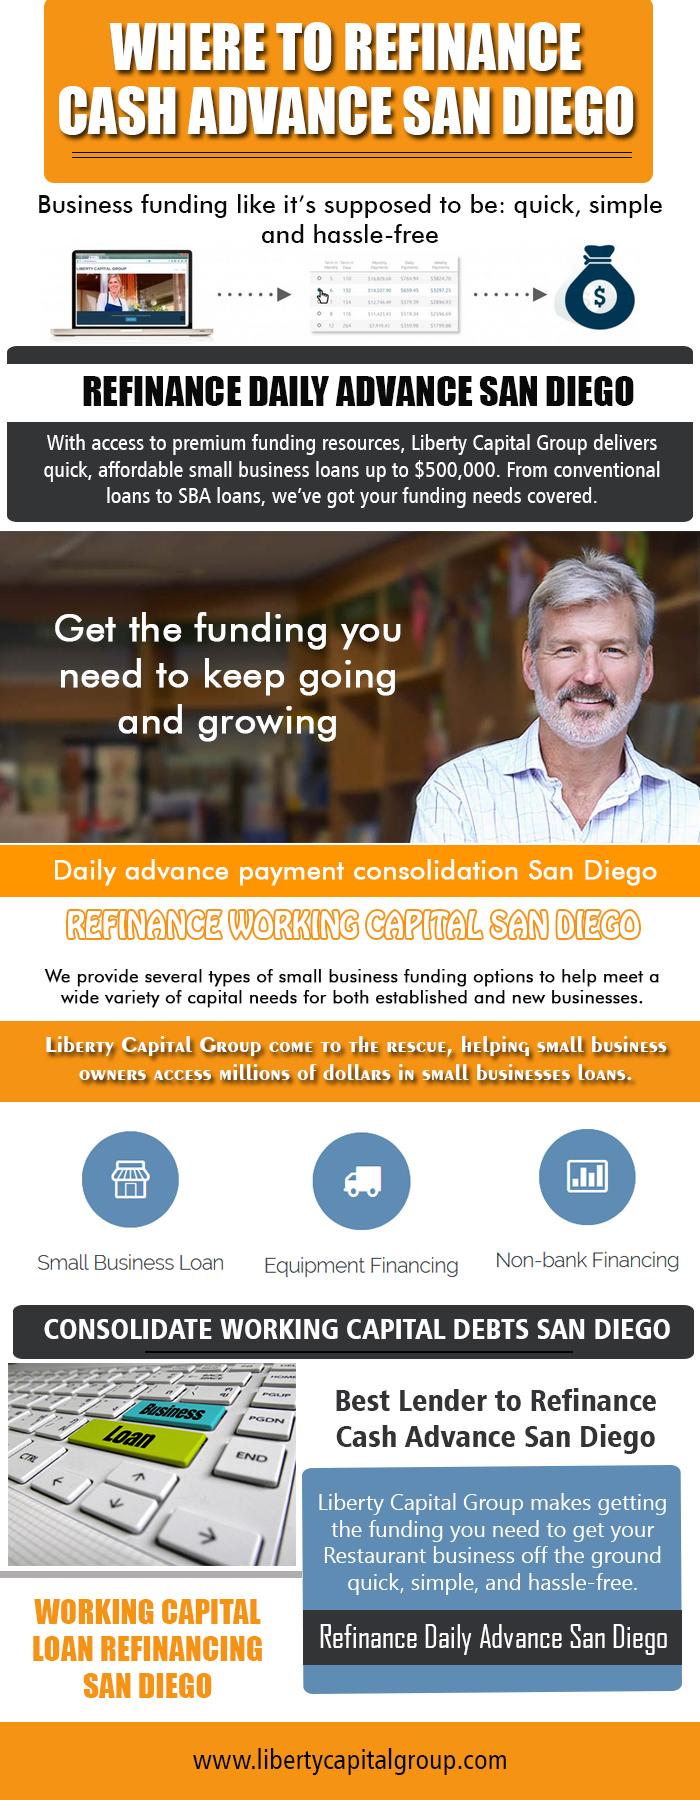 Working Capital Loan Refinancing San Diego